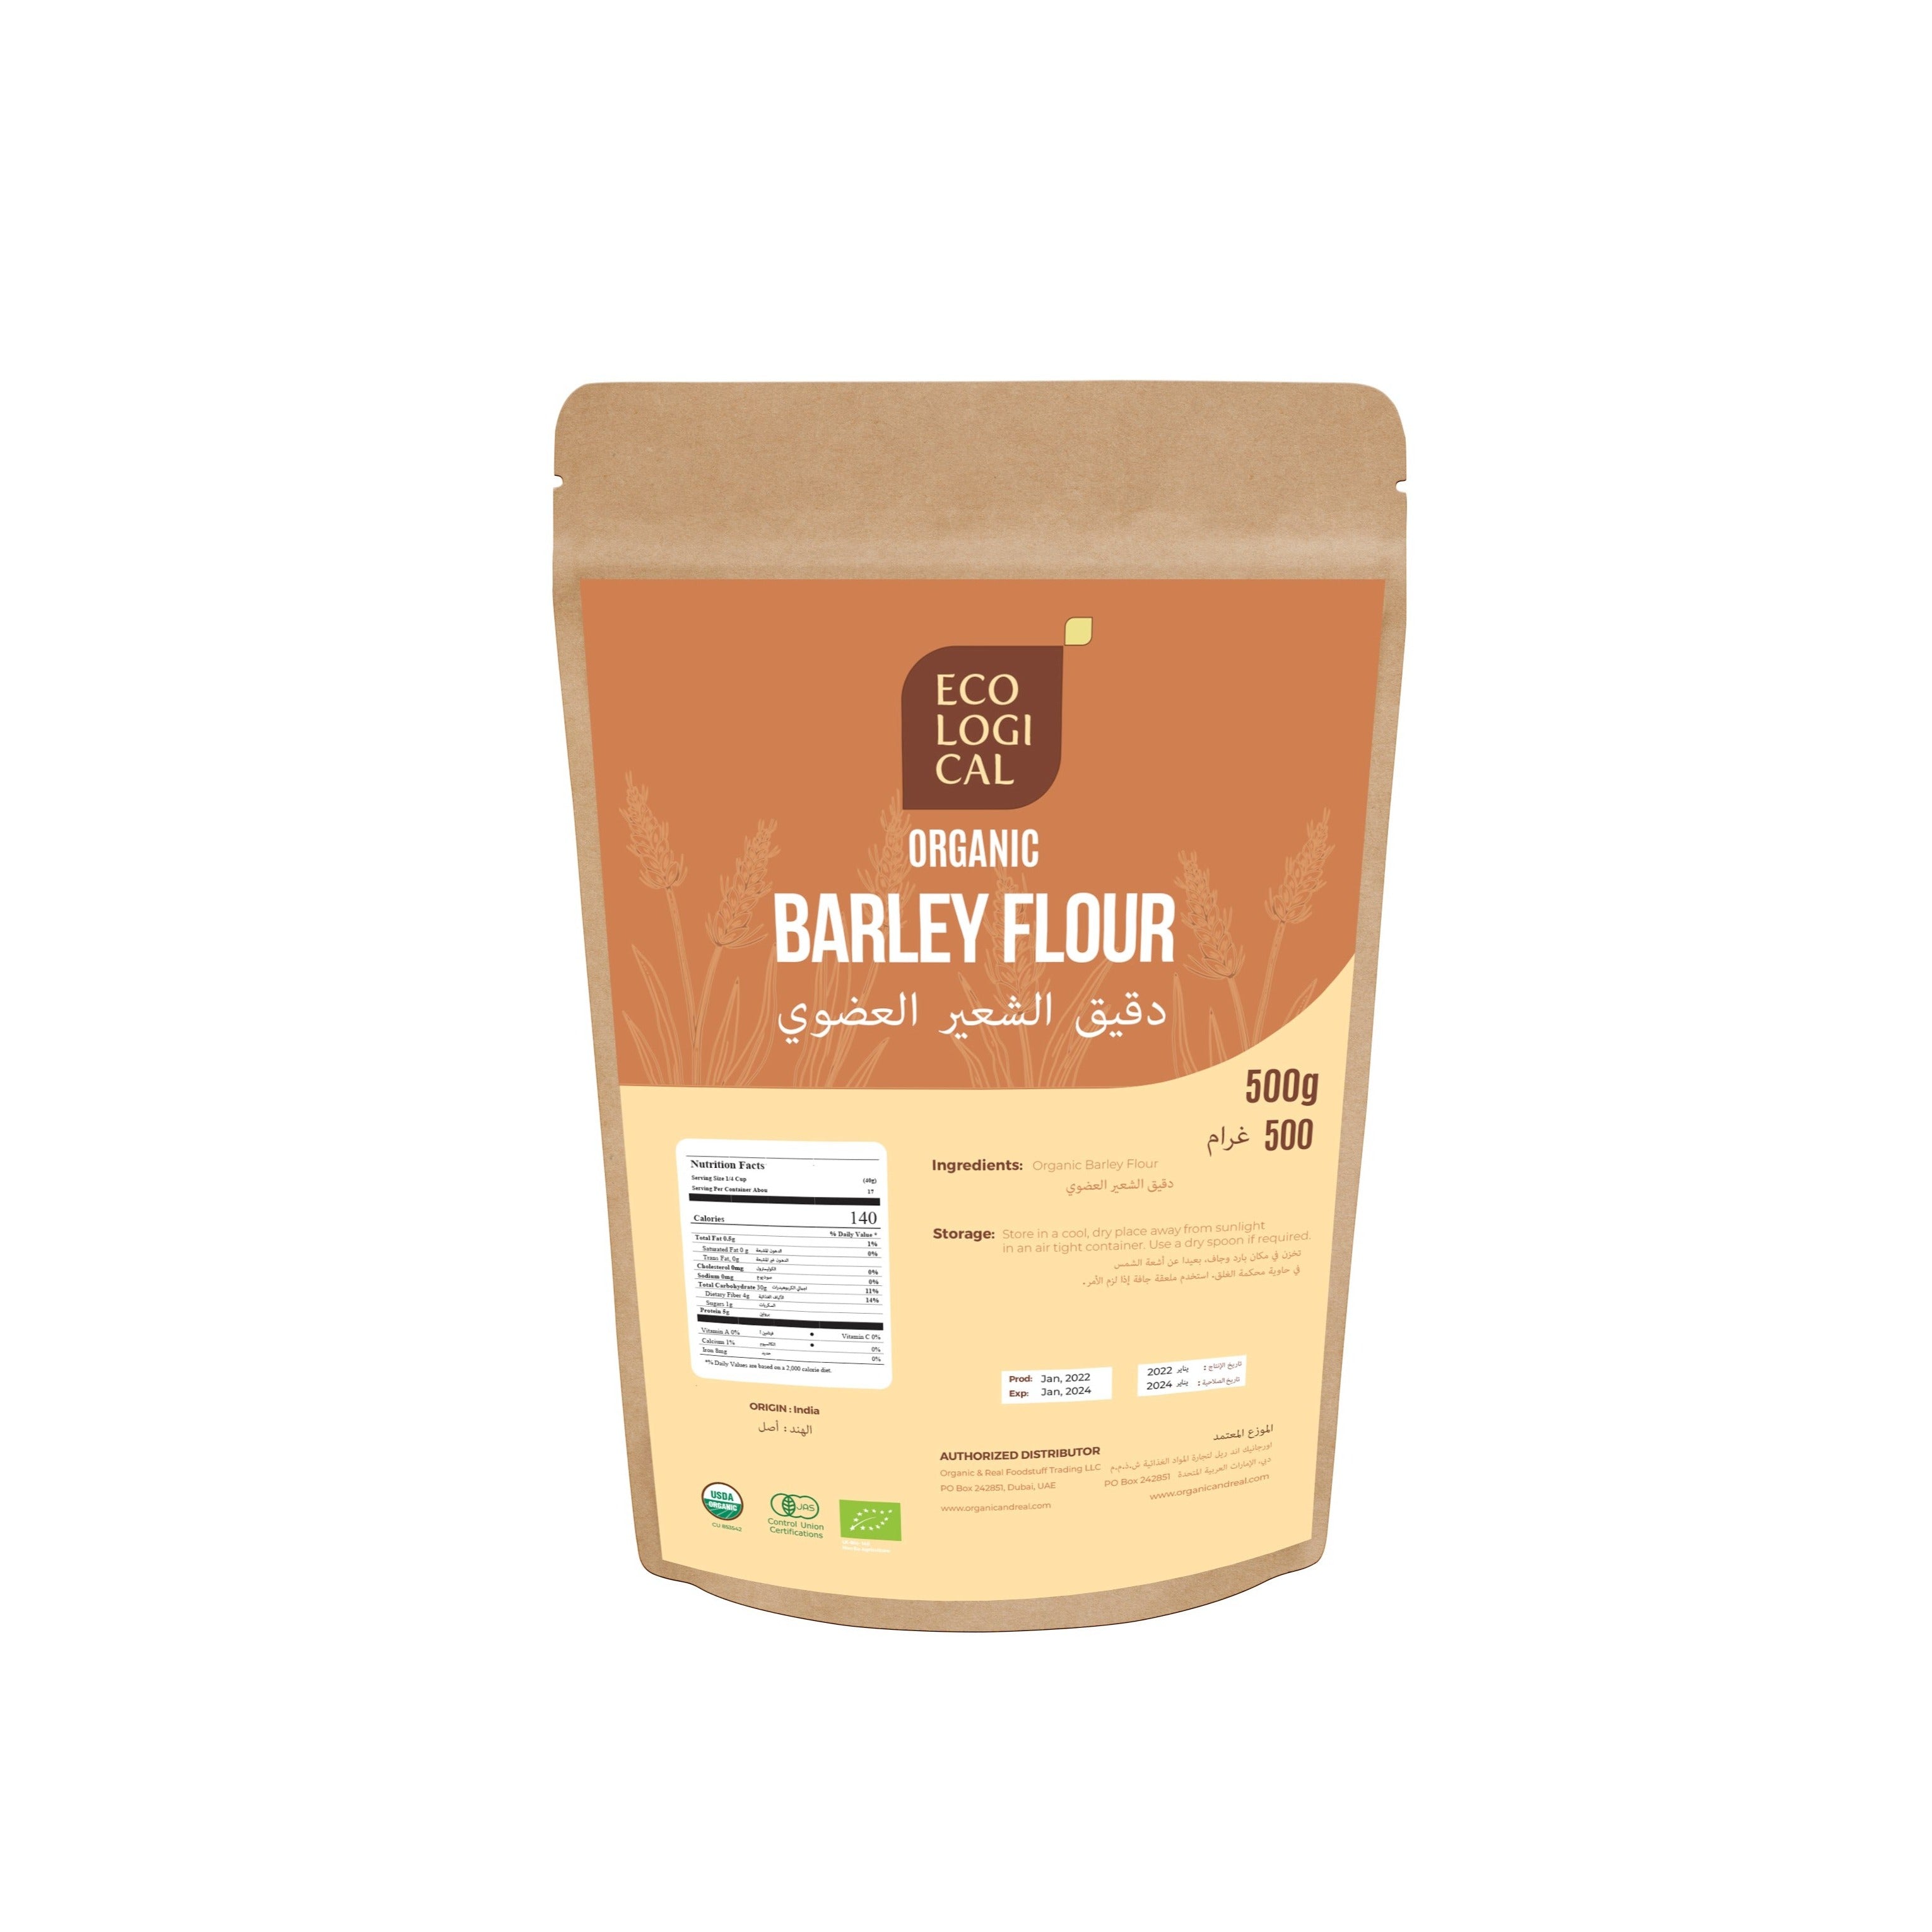 ECOLOGICAL Organic Barley Flour, 500g